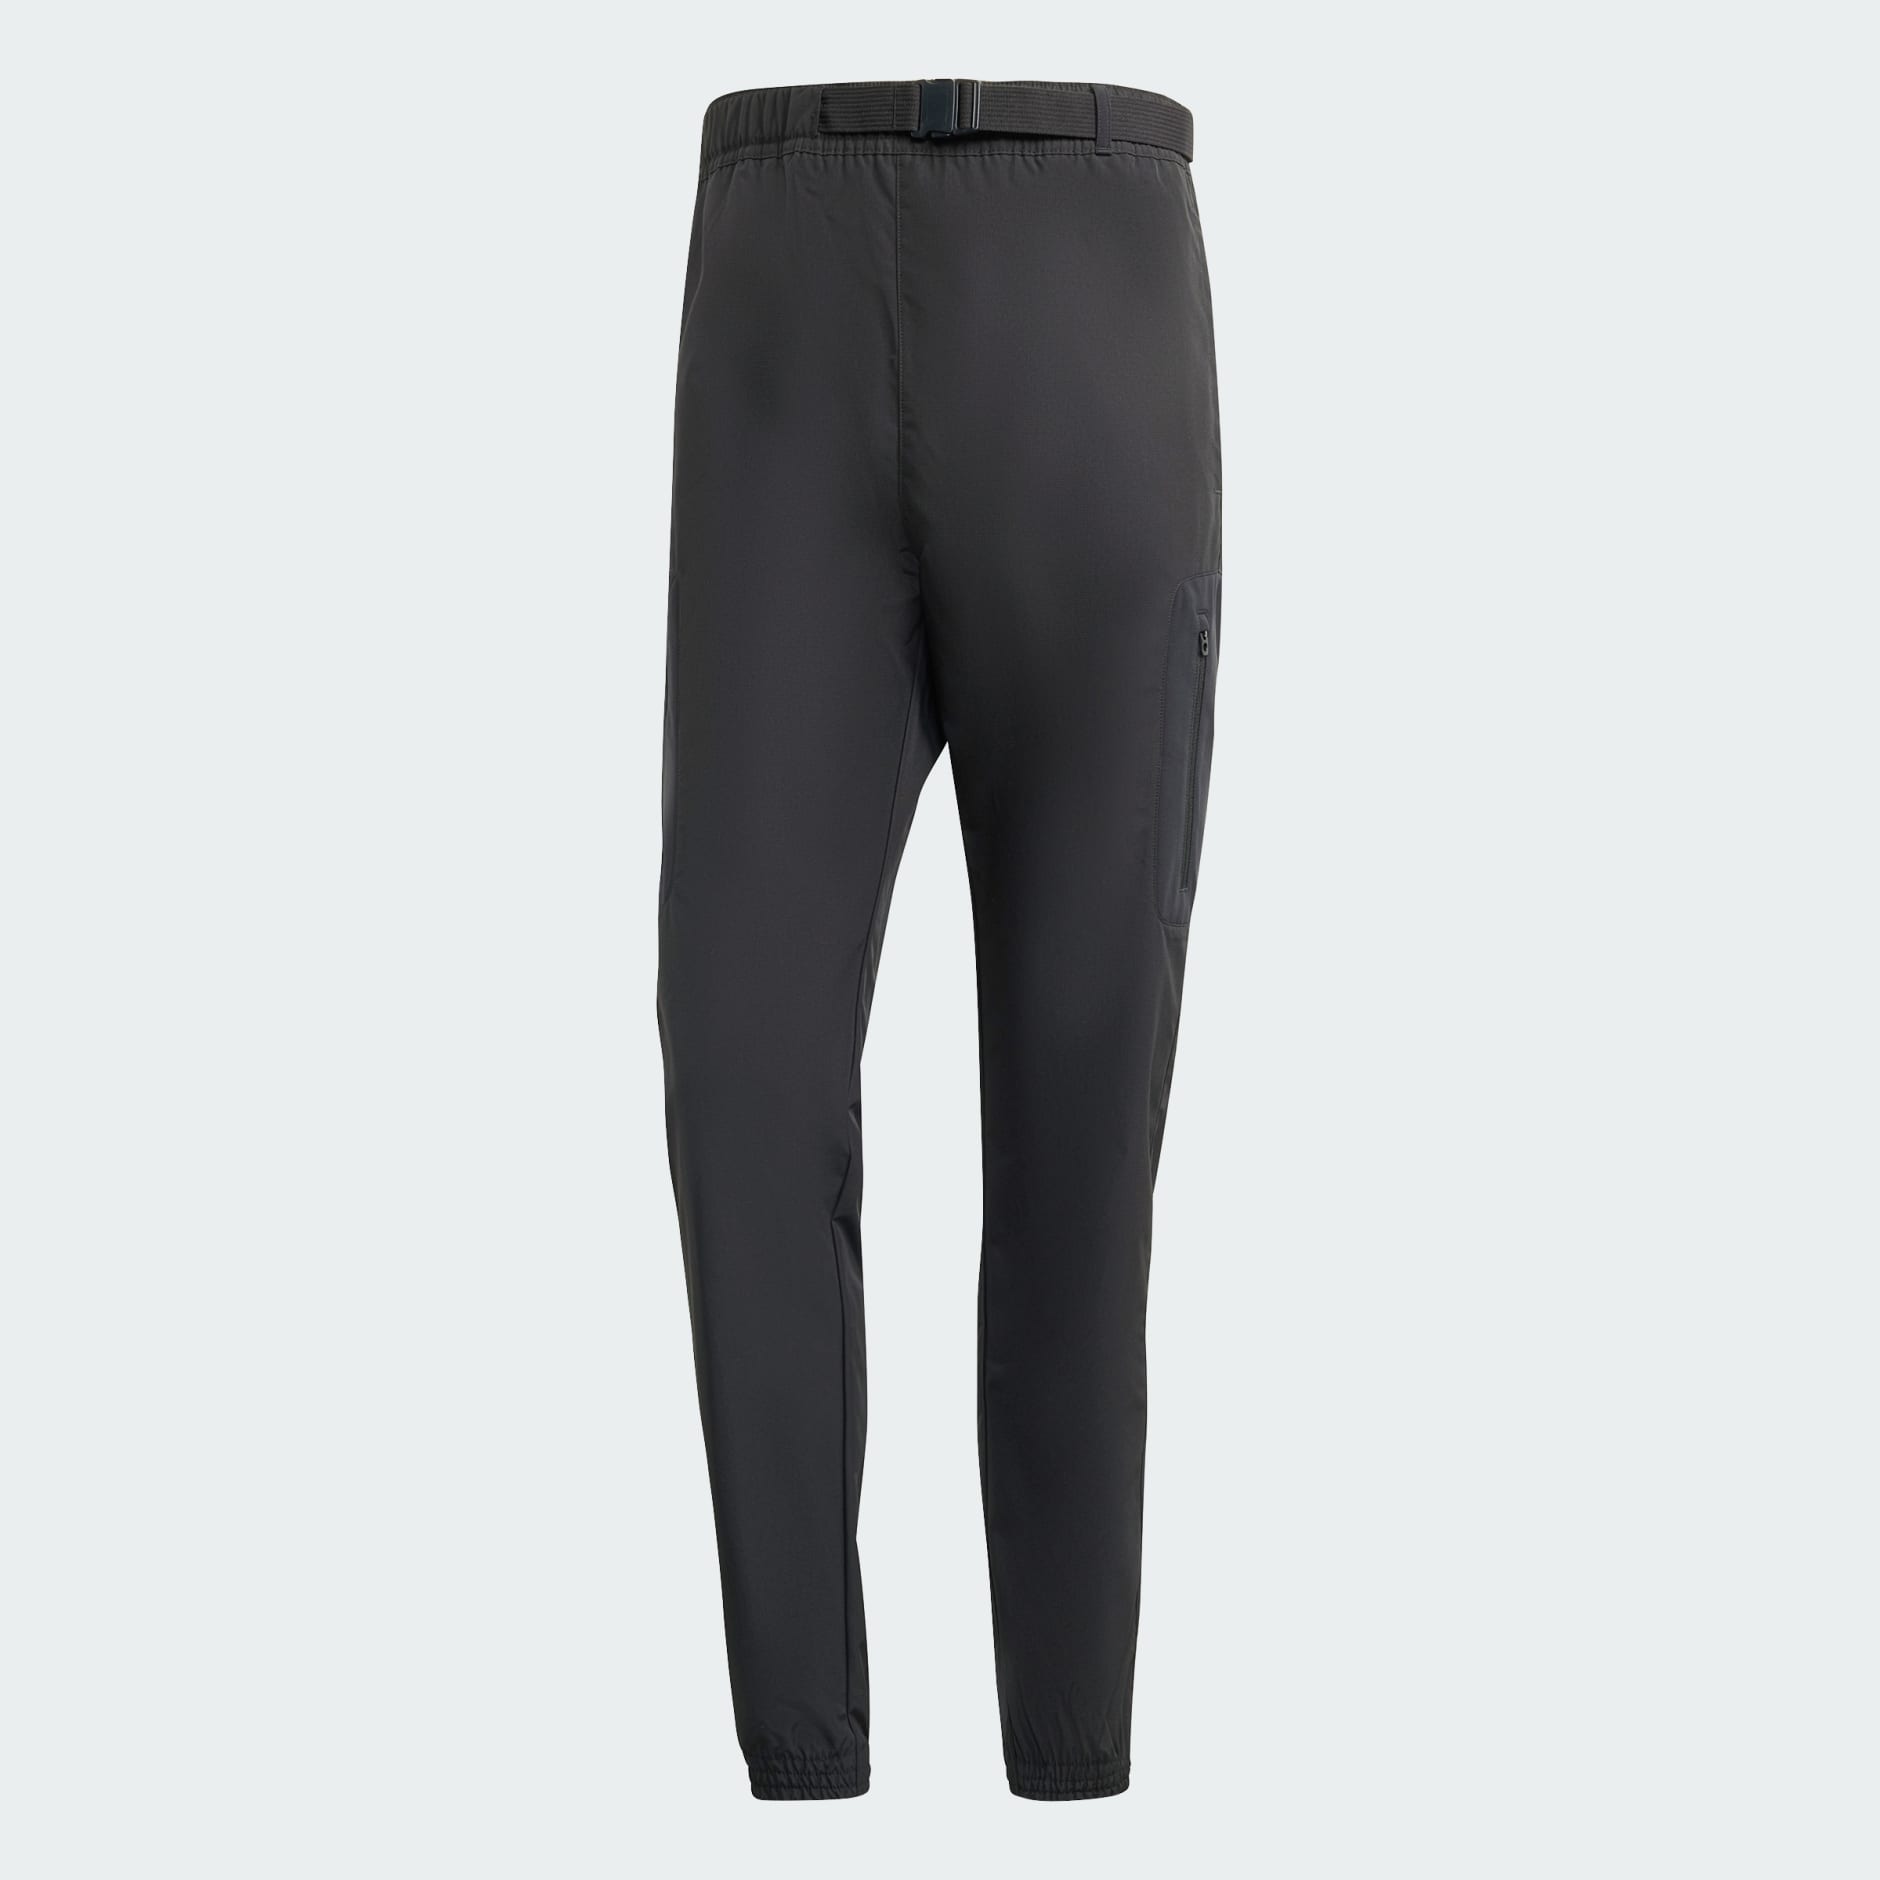 Clothing - Utility Cargo Pants - Black | adidas South Africa